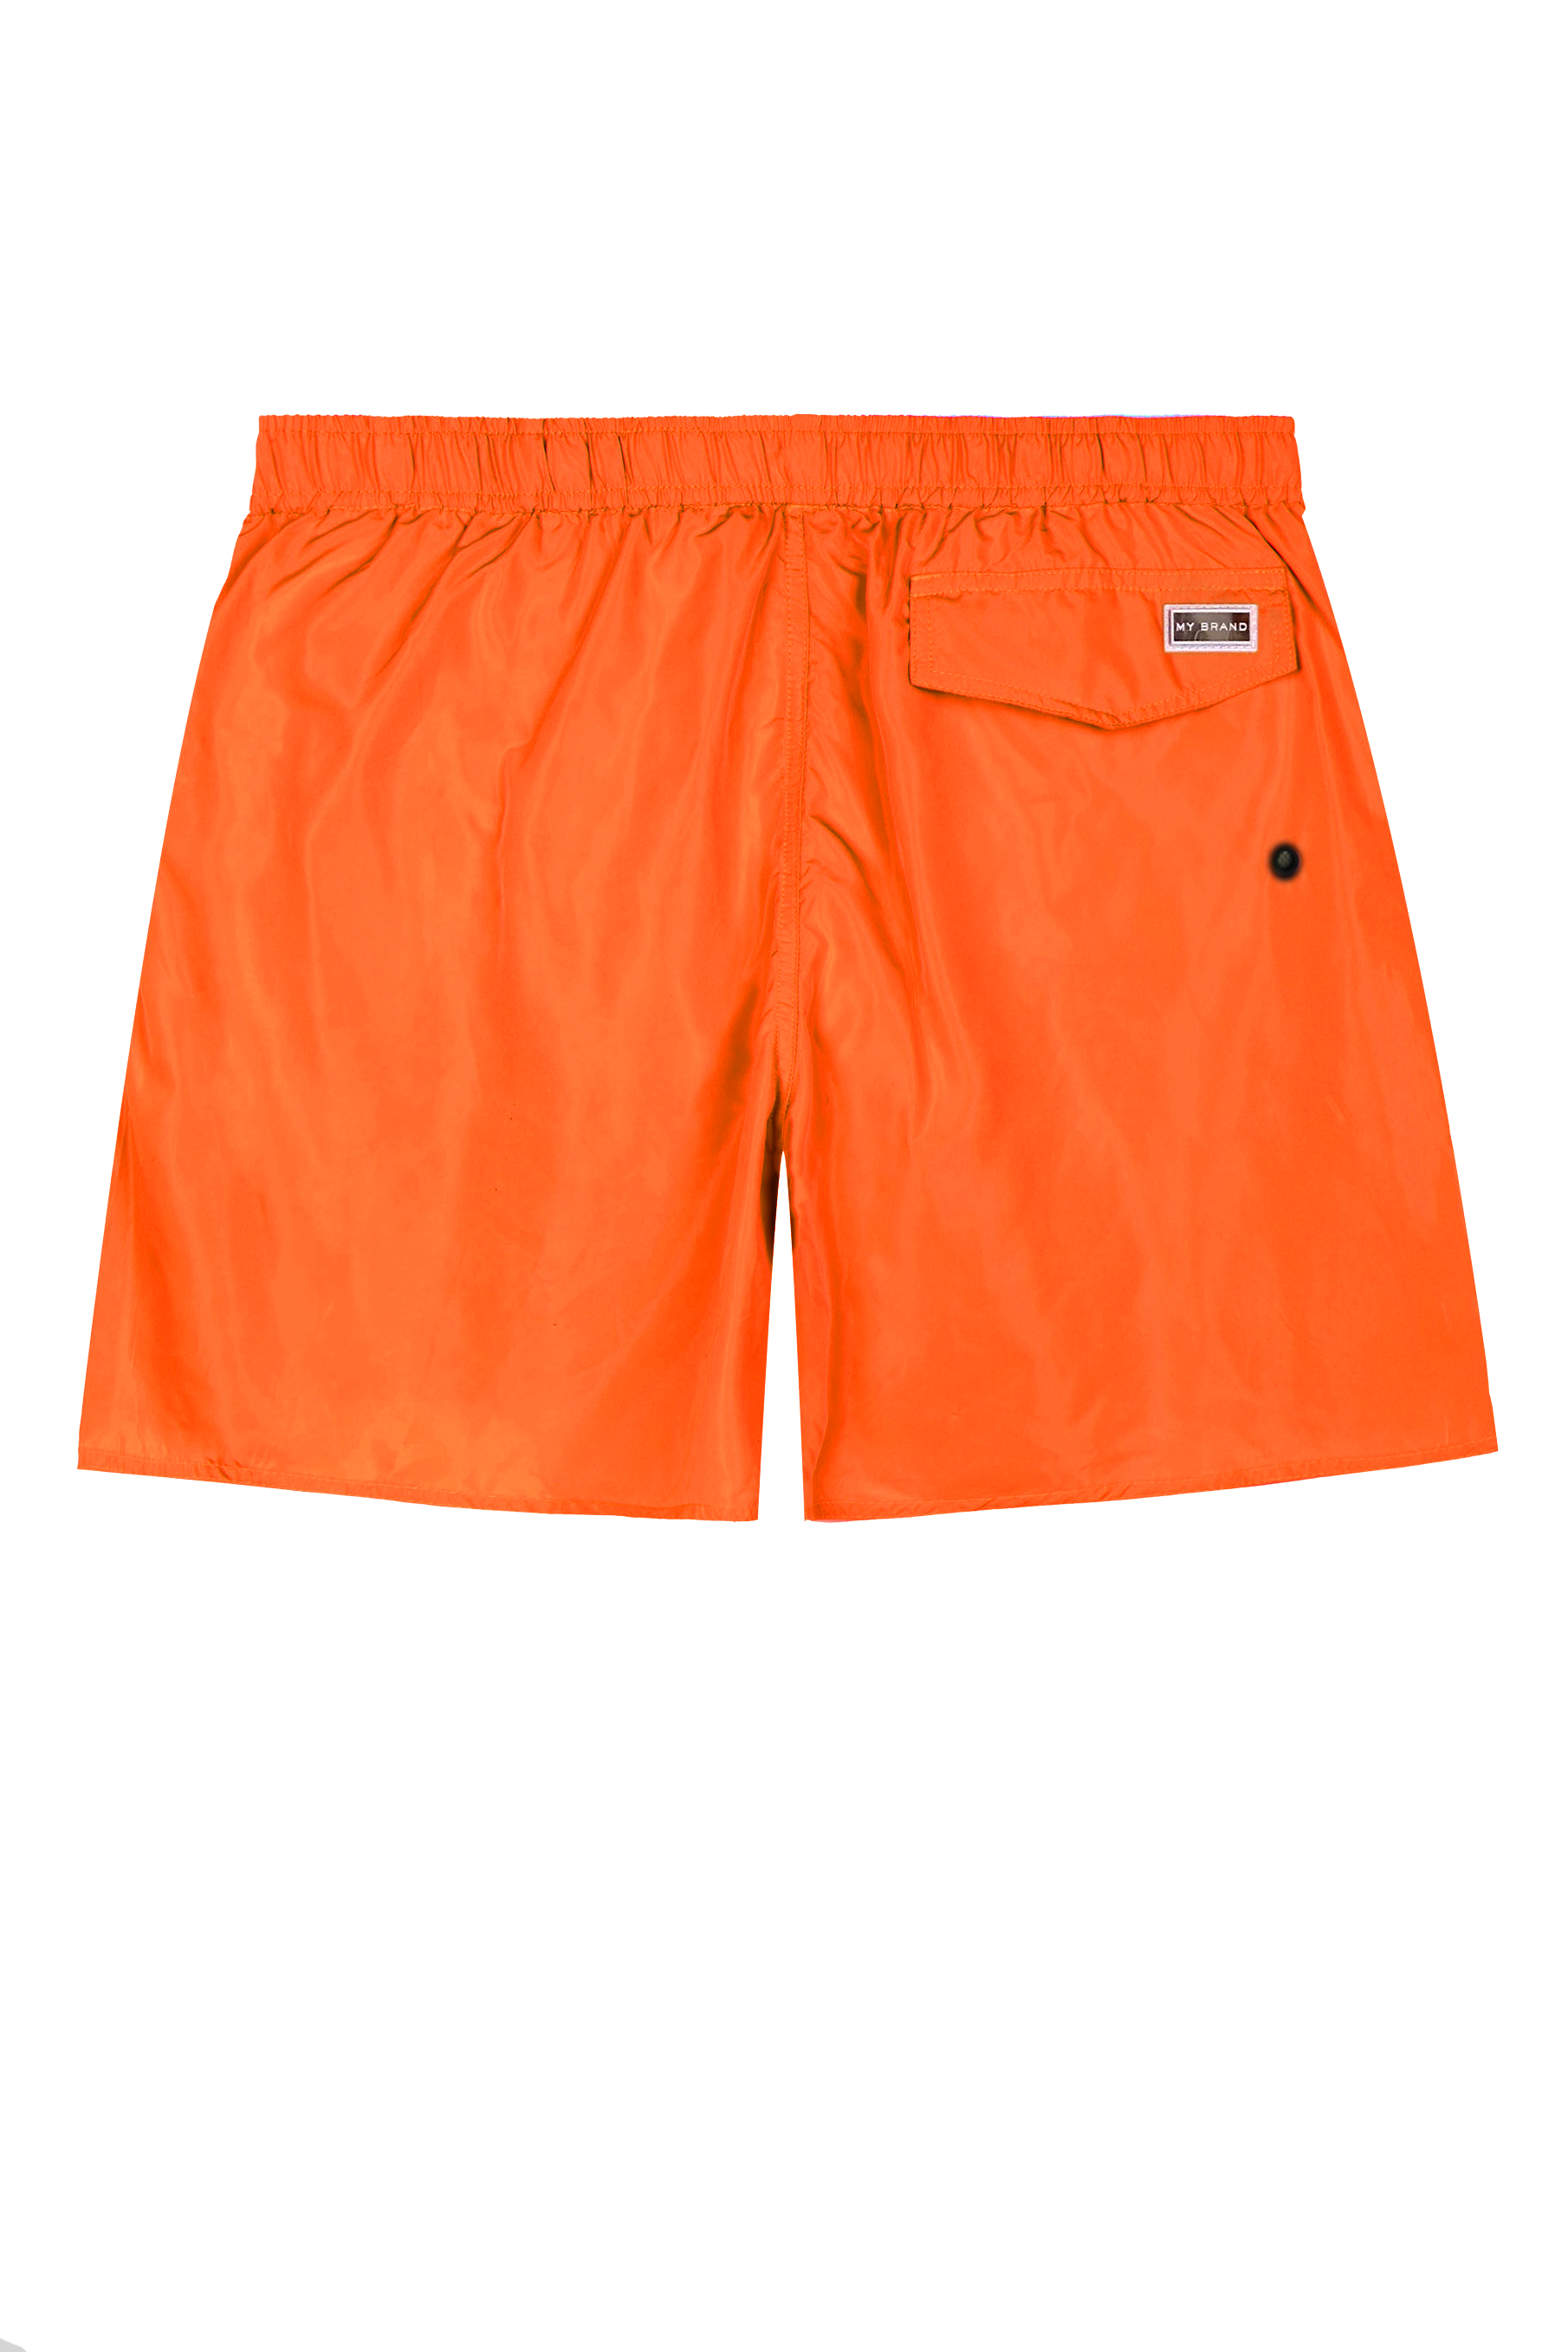 Basic Swim Capsule Swimshort Neon Orange